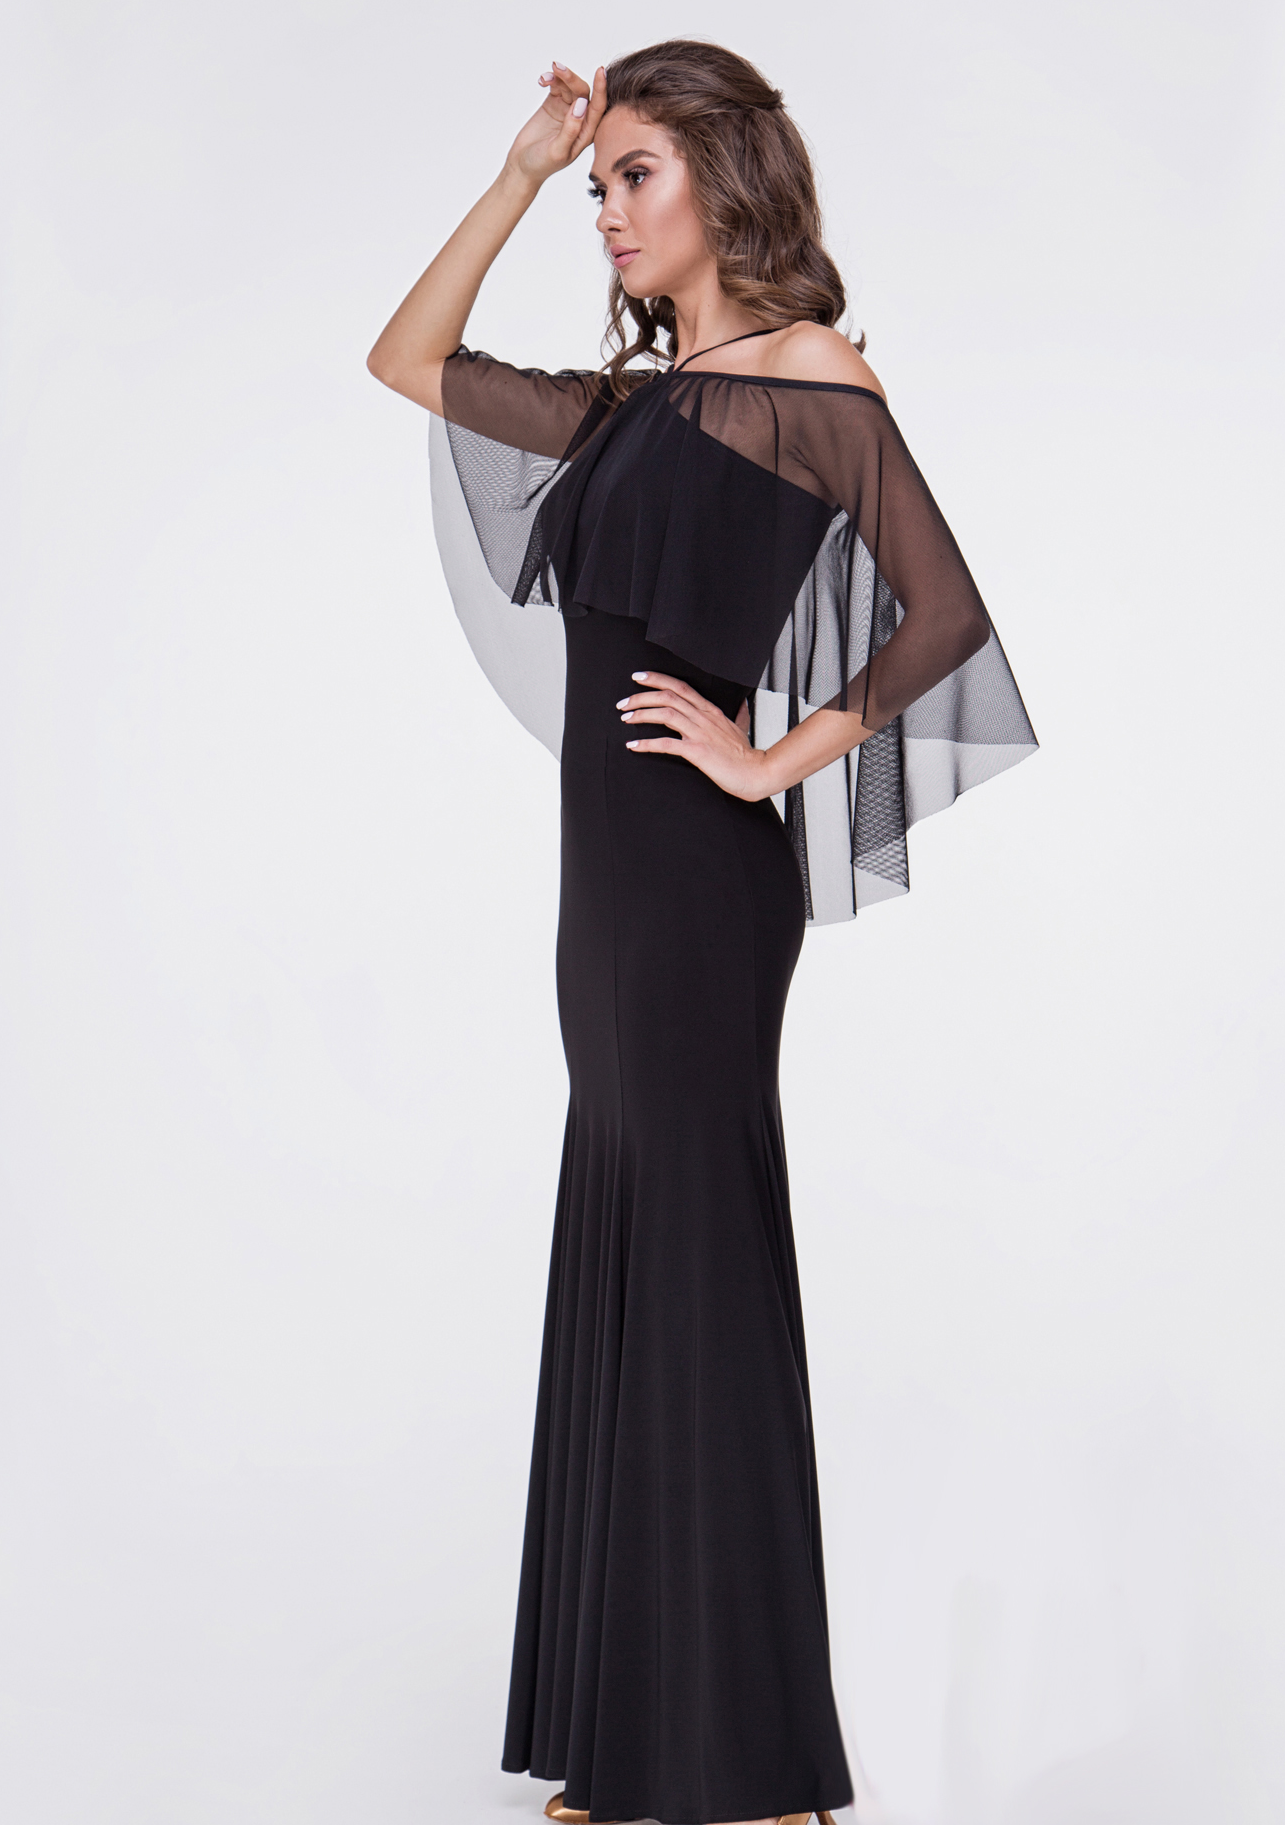 mesh ruffles and cold shoulder details on black ballroom dress